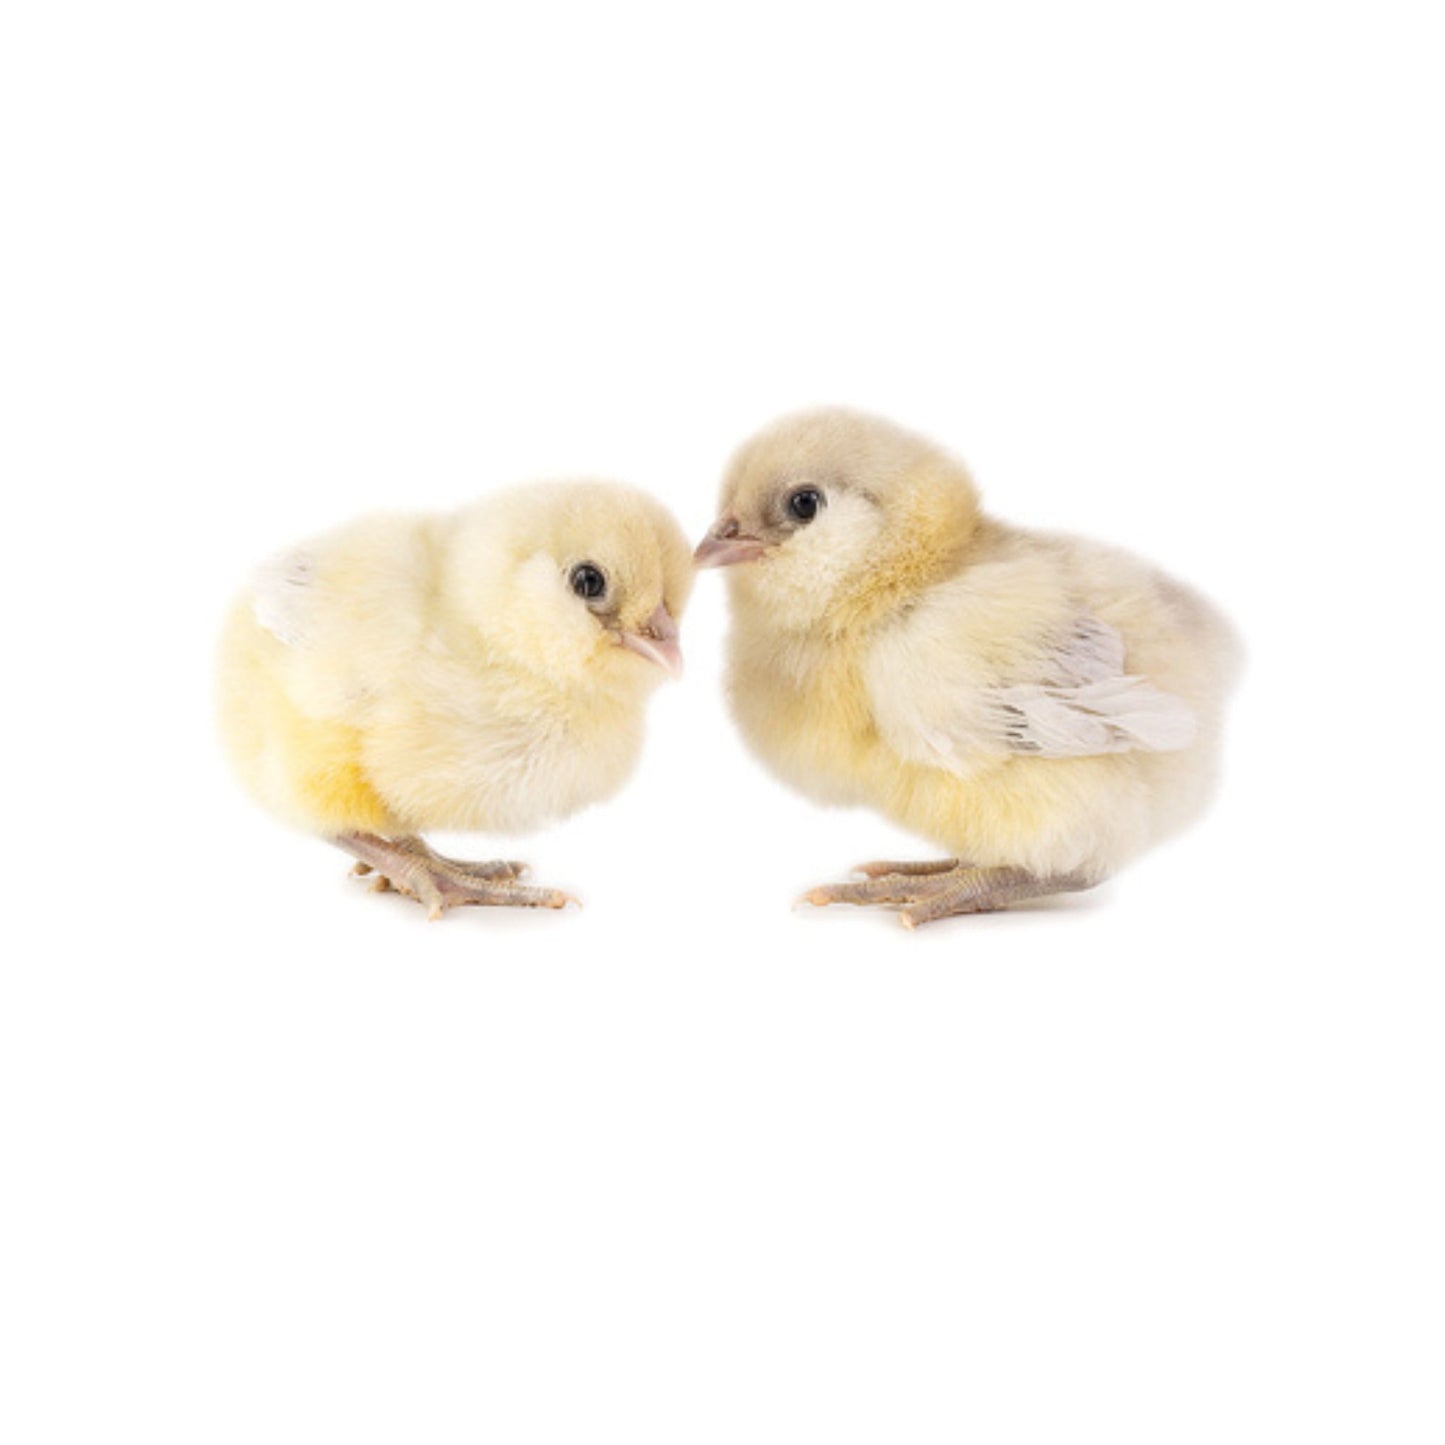 My Pet Chicken offers Splash Ameraucana baby chicks for sale.